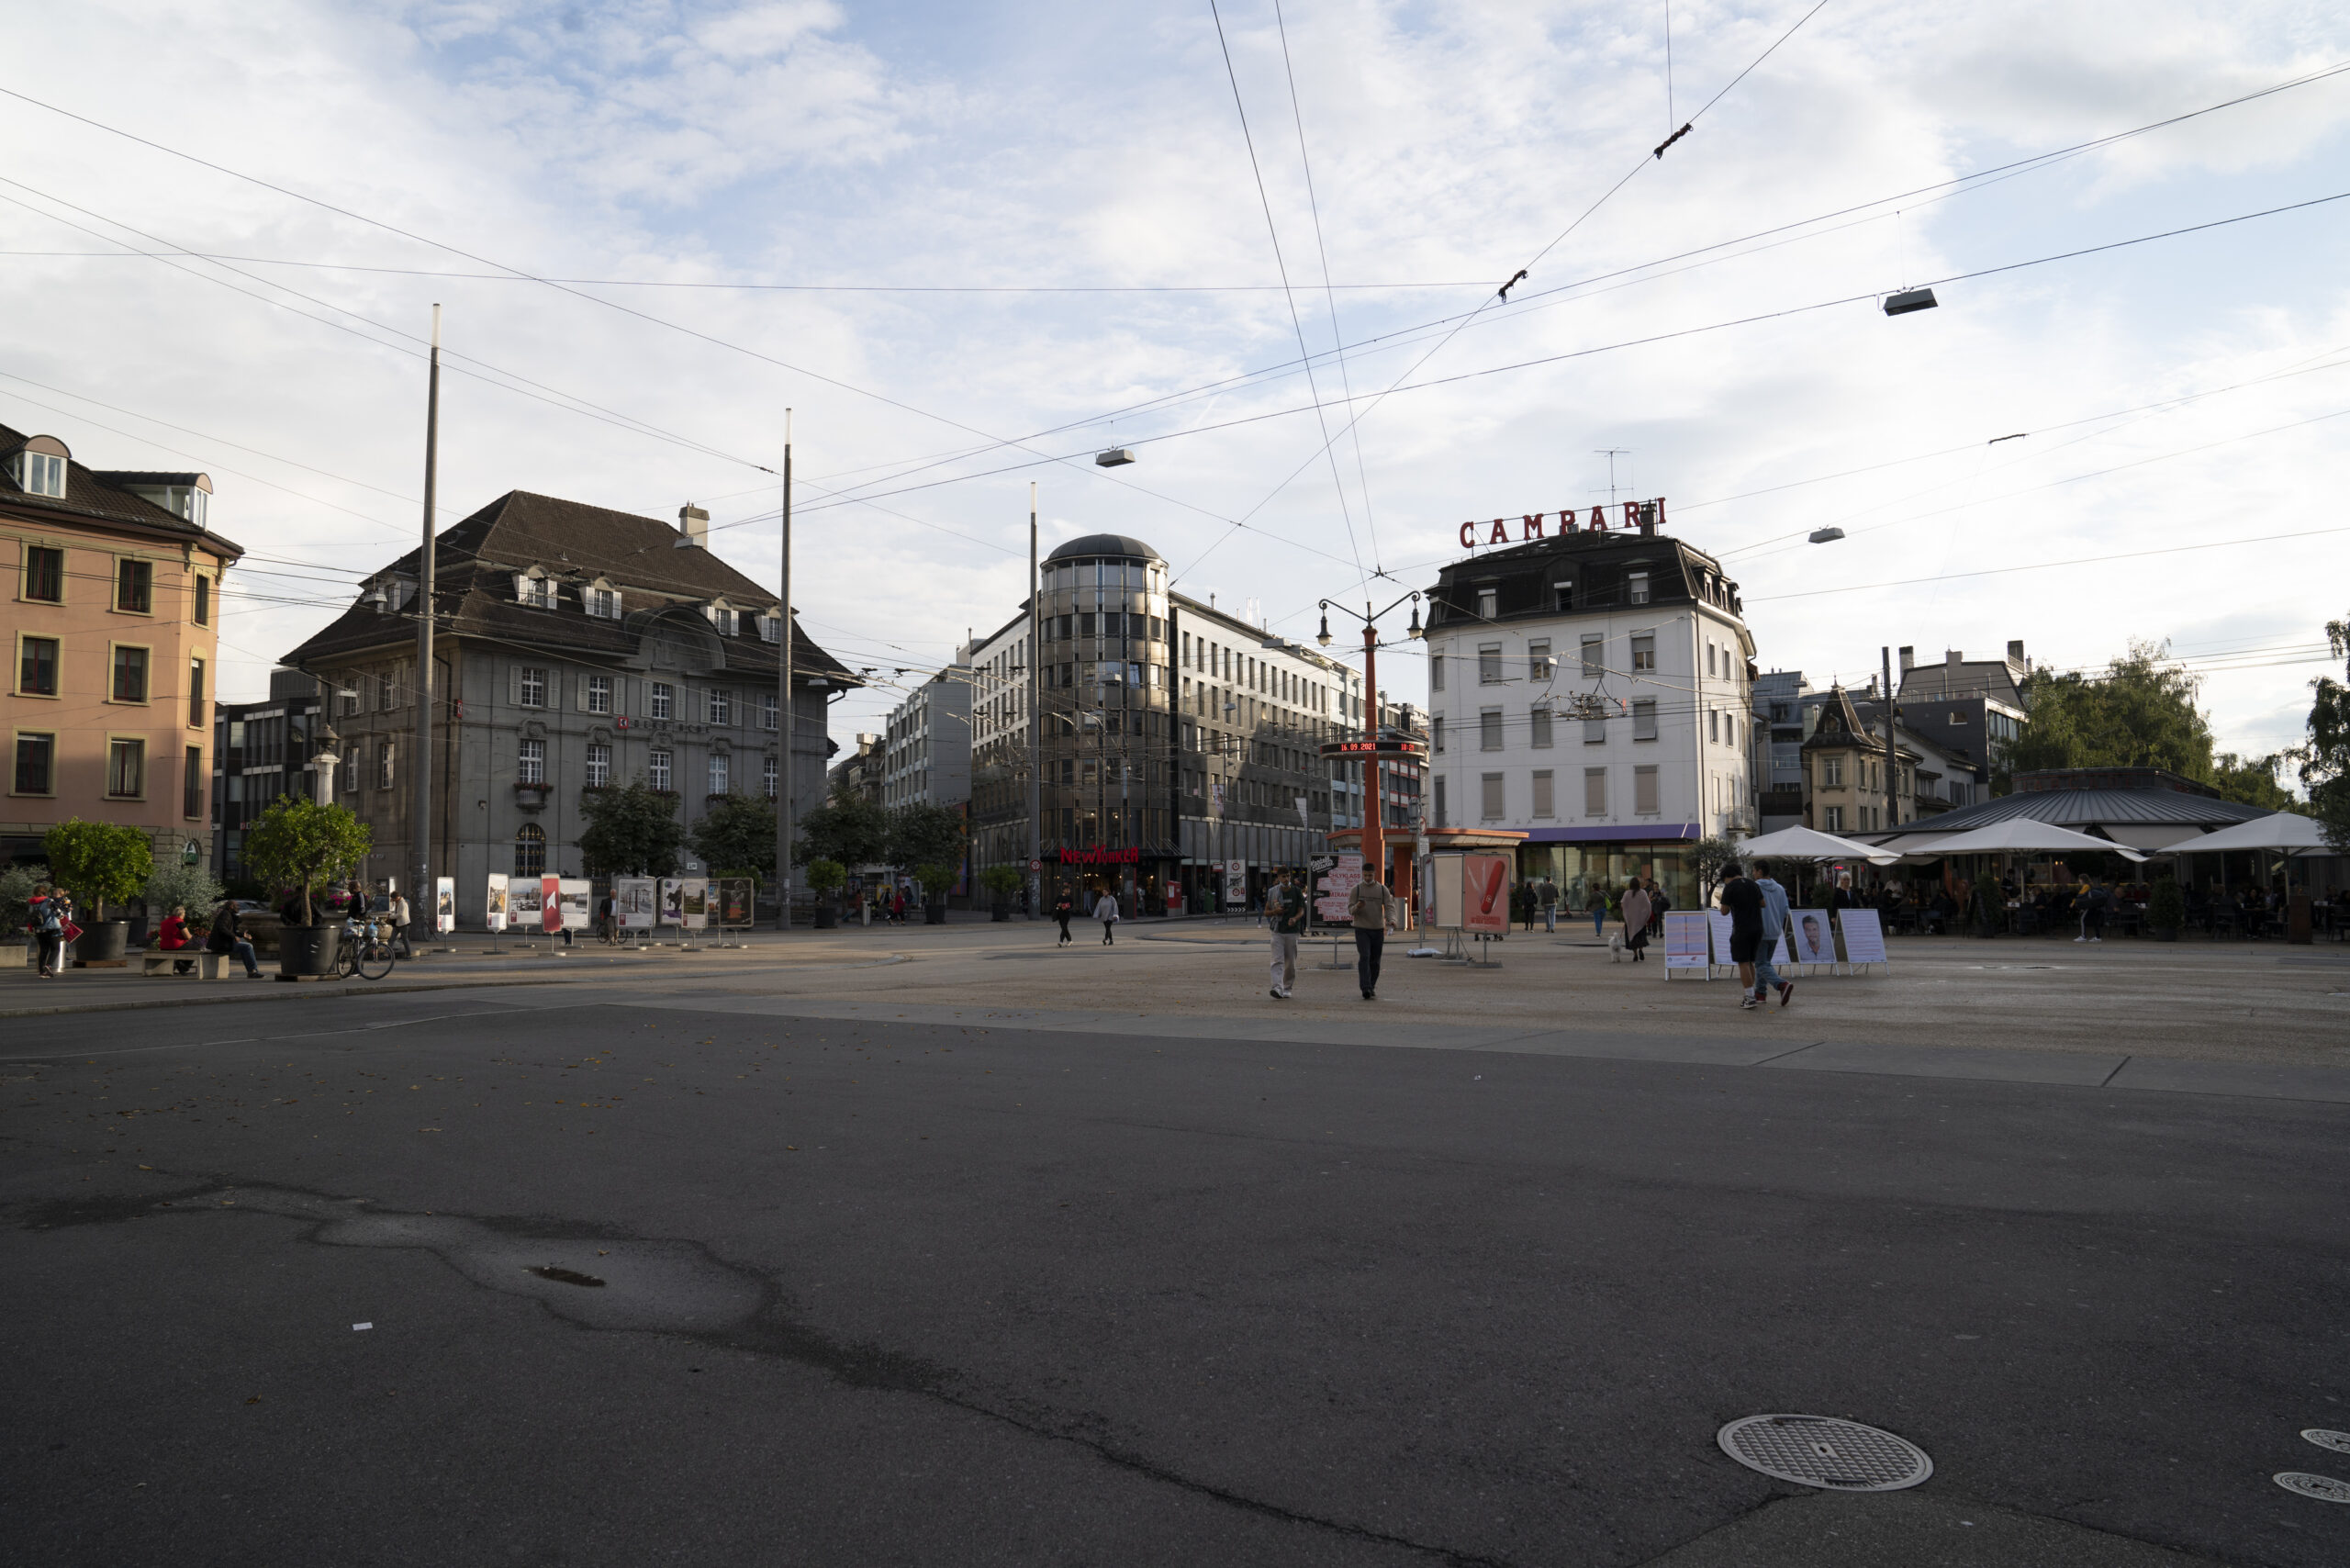 Zentralplatz Biel Bienne. Current situation with lots of concrete, traffic and dead space.